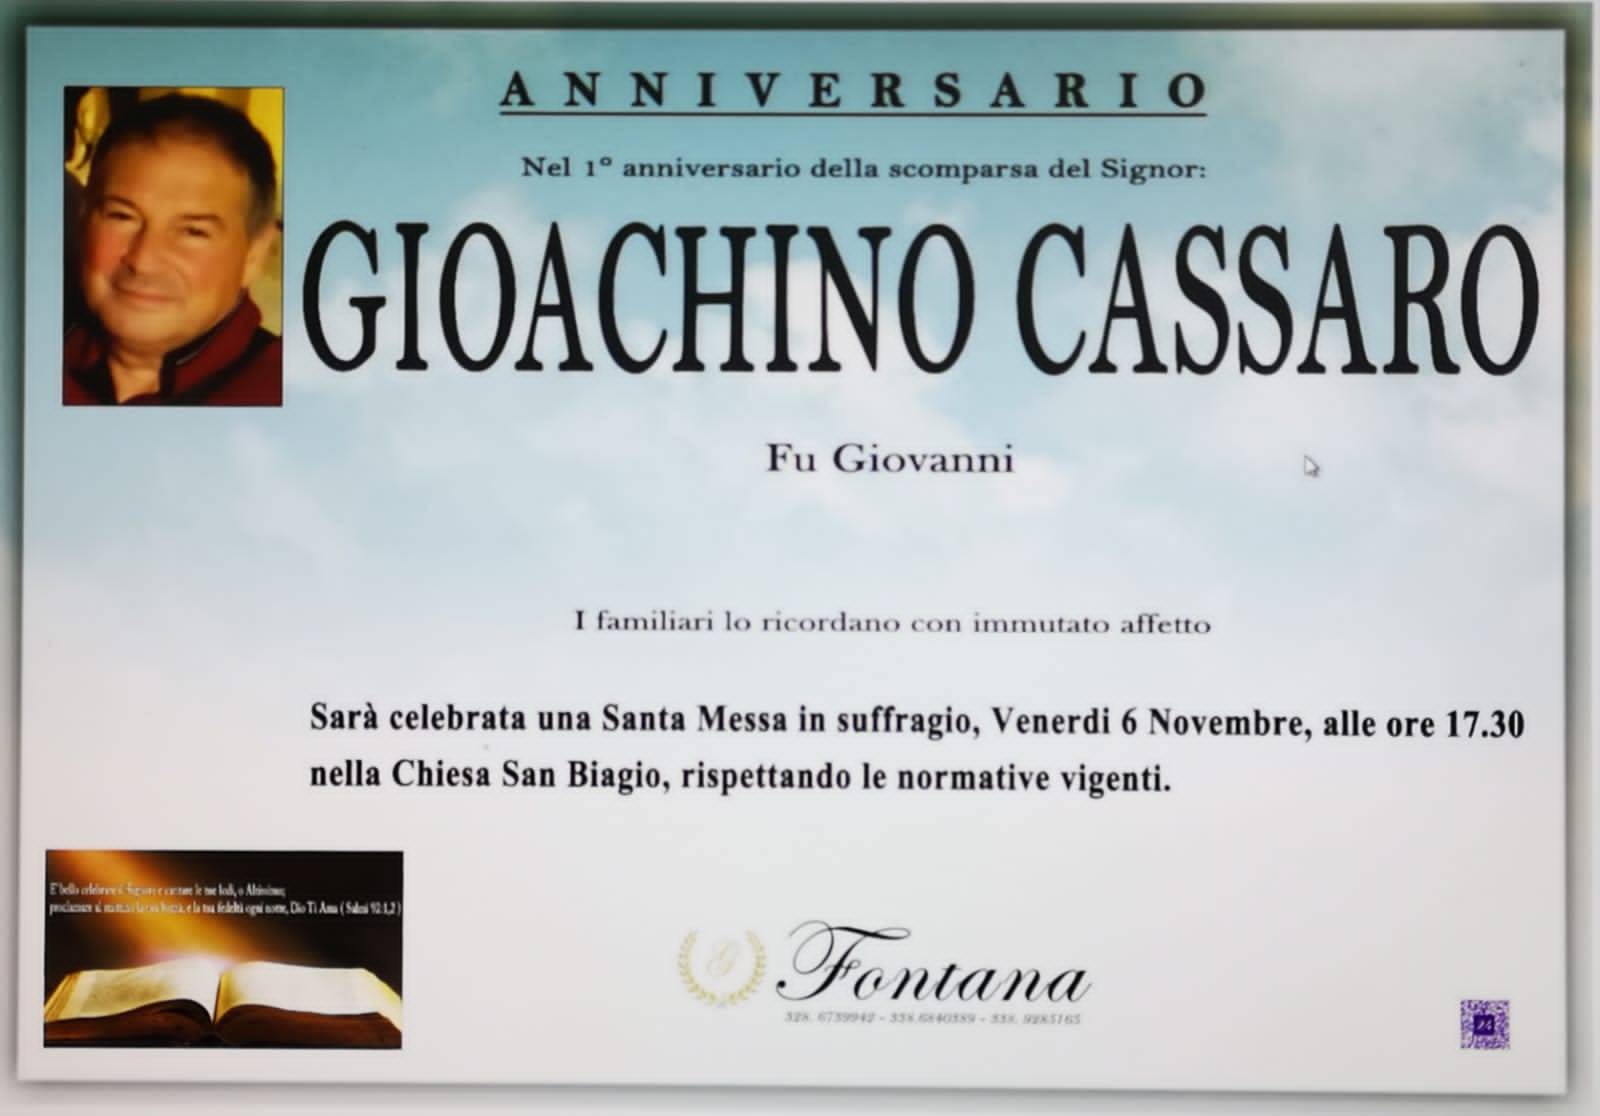 Gioachino Cassaro